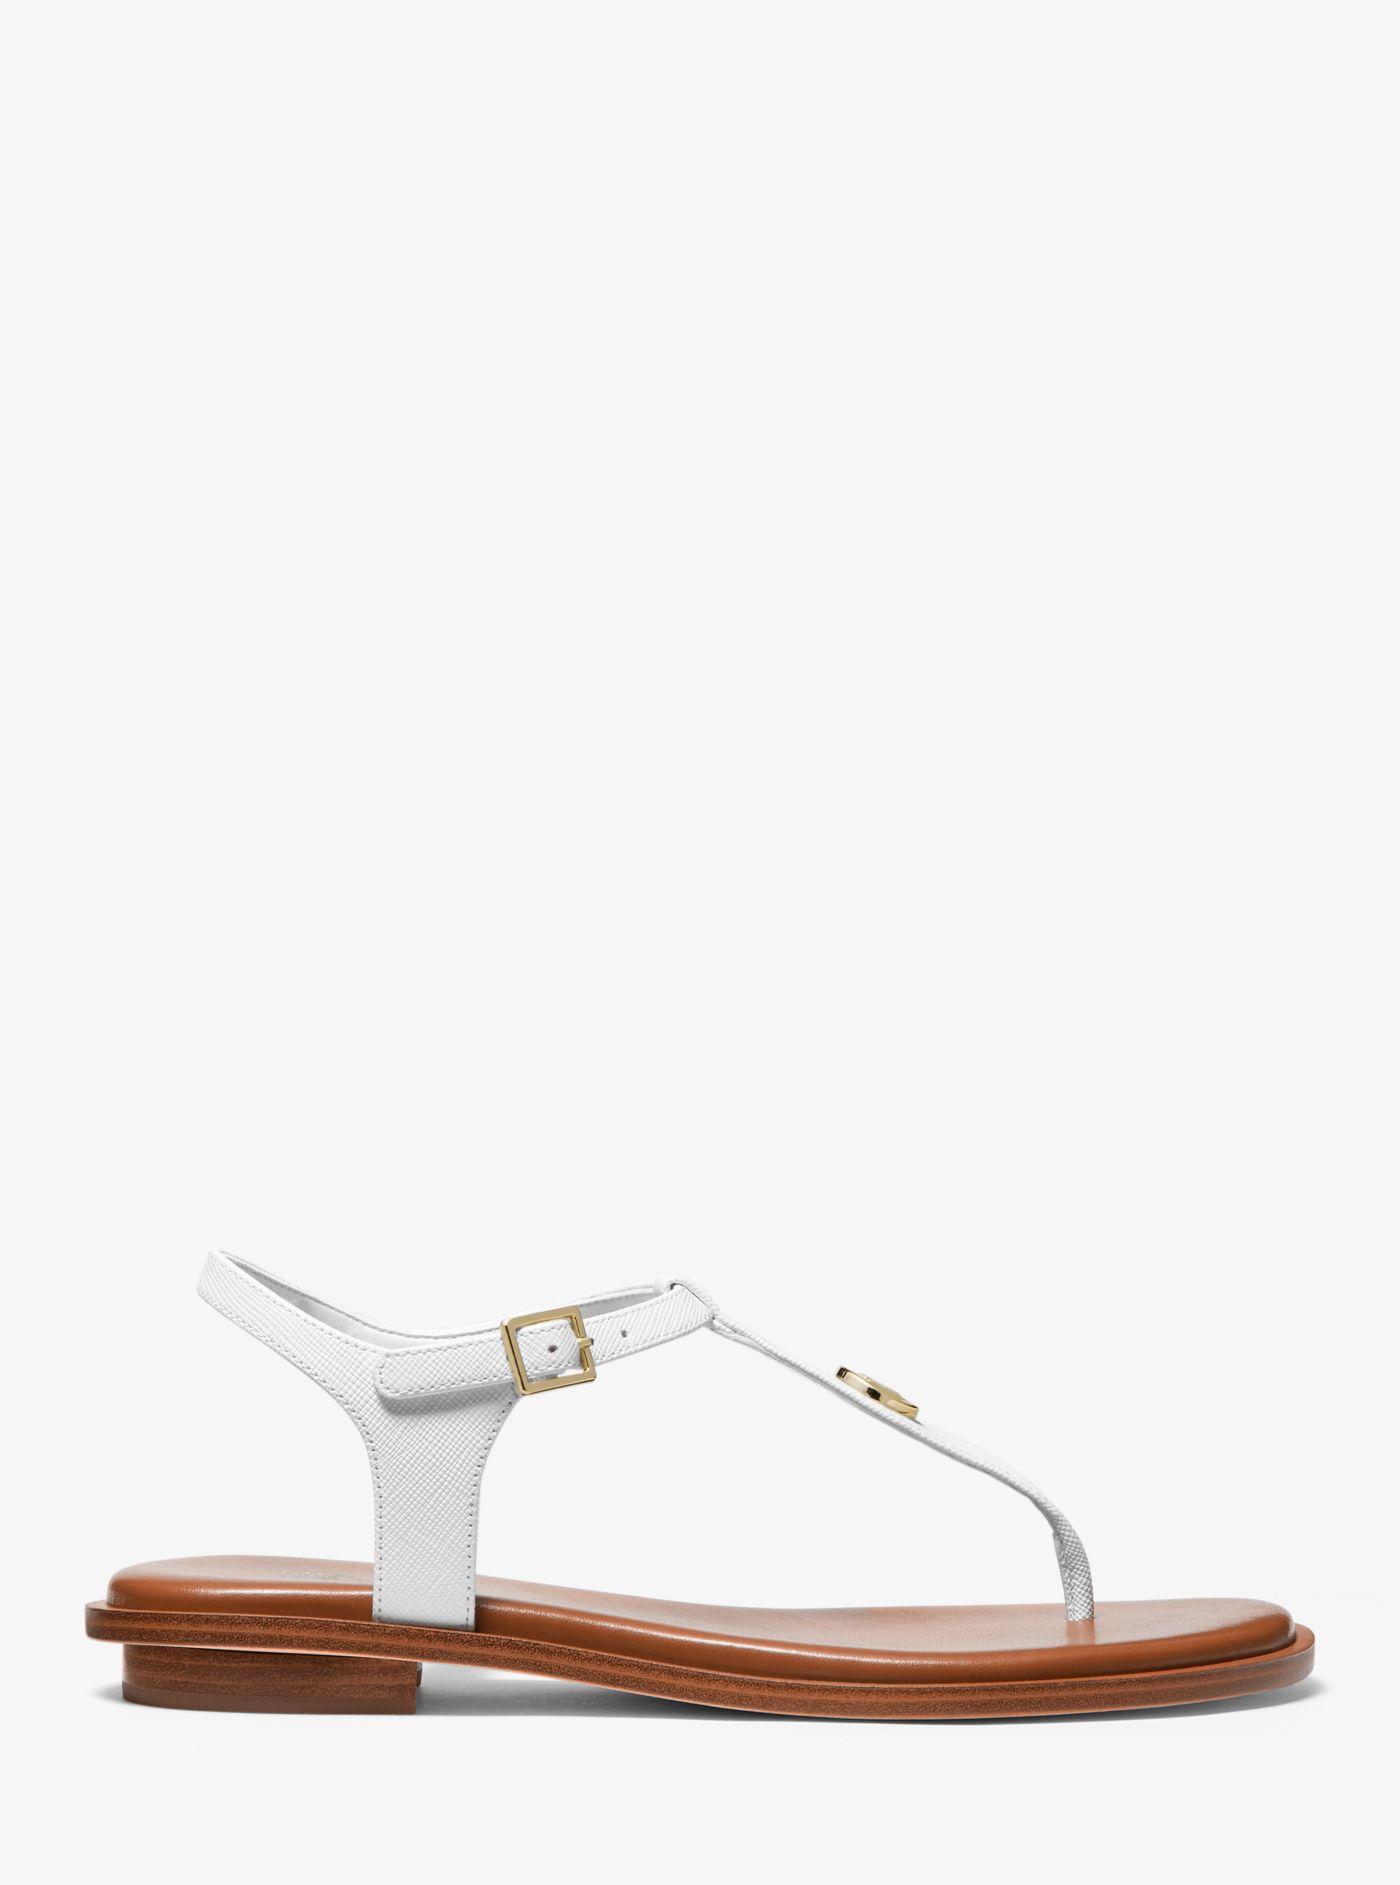 Michael Kors Mallory Leather T-strap Sandal | Lyst Australia